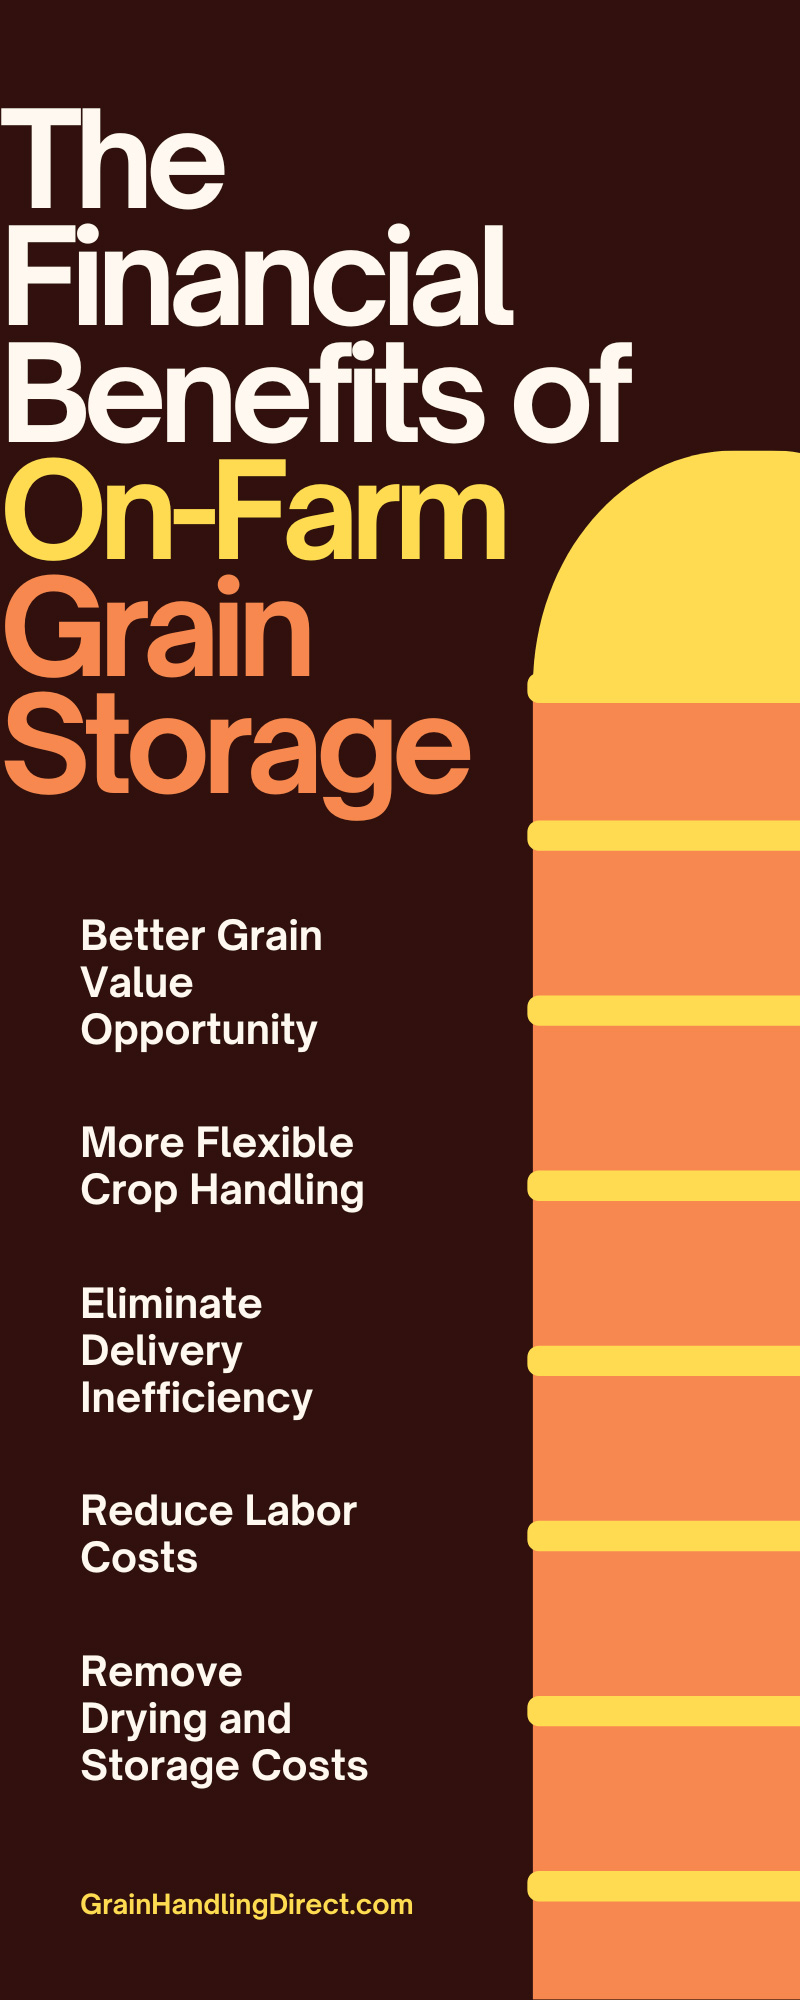 The Financial Benefits of On-Farm Grain Storage